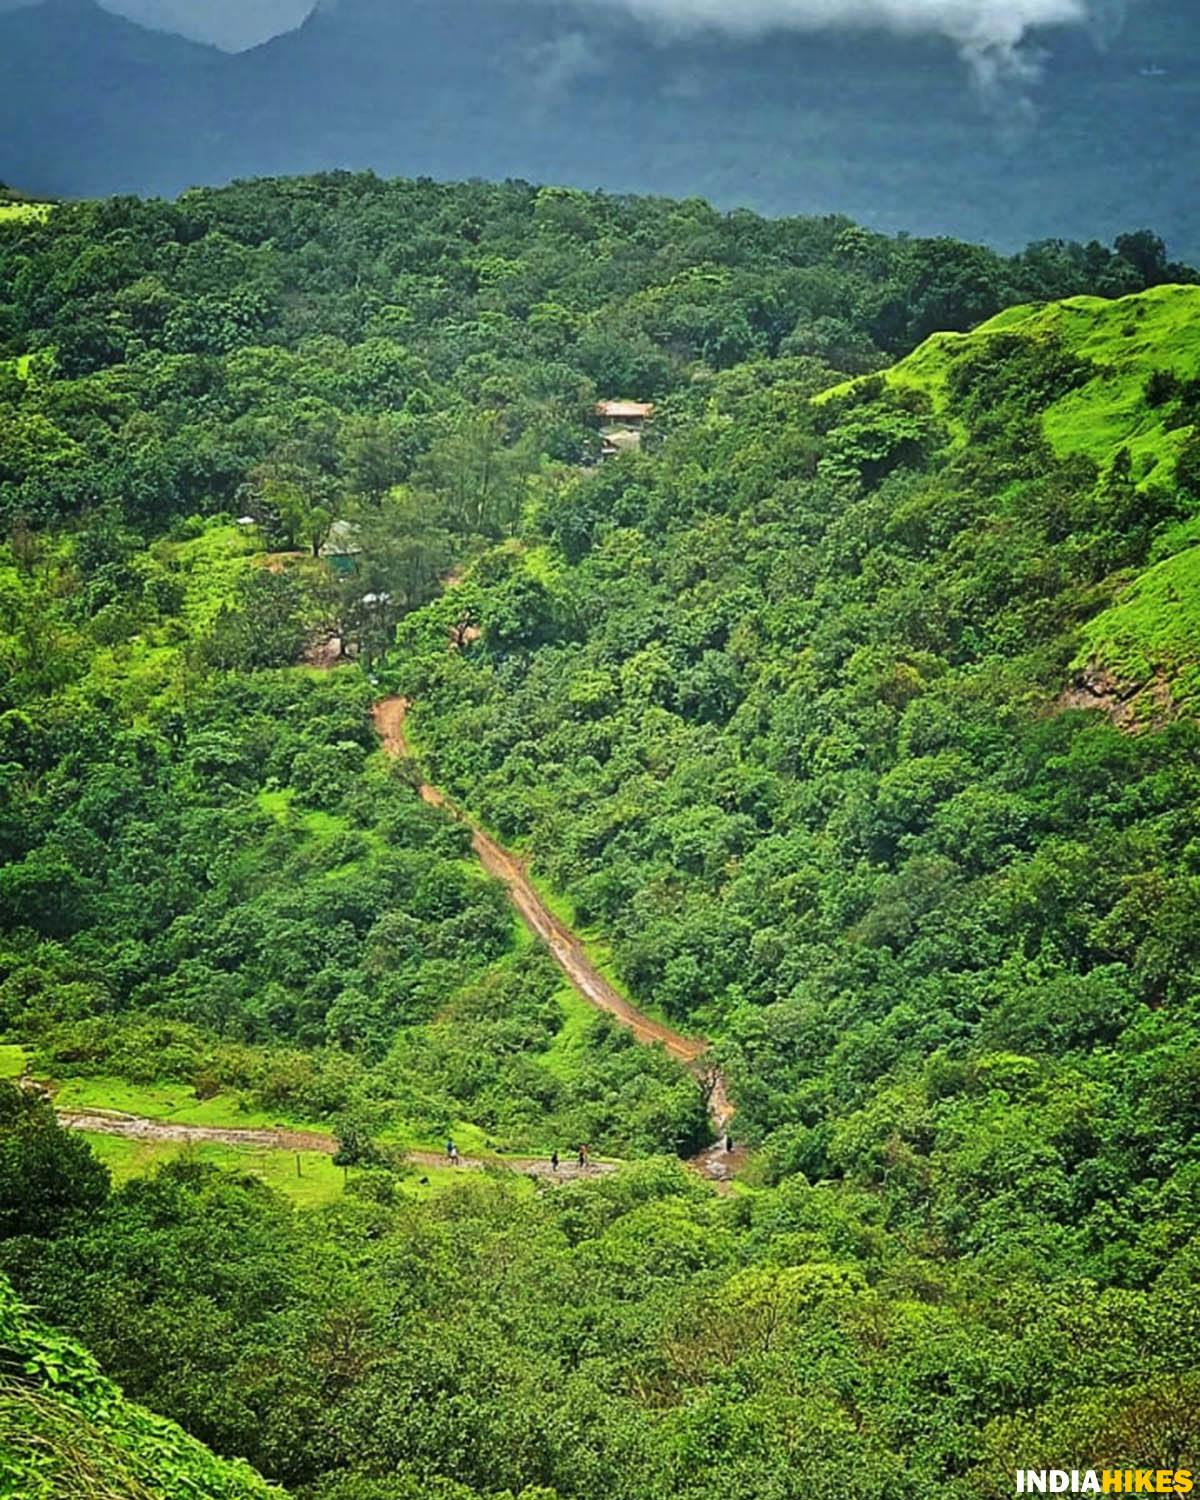 Trail from a distance, Rajmachi Fort trek, Rajmachi trek, Treks near Pune, western ghats treks, Sahyadri treks, treks in Maharashtra